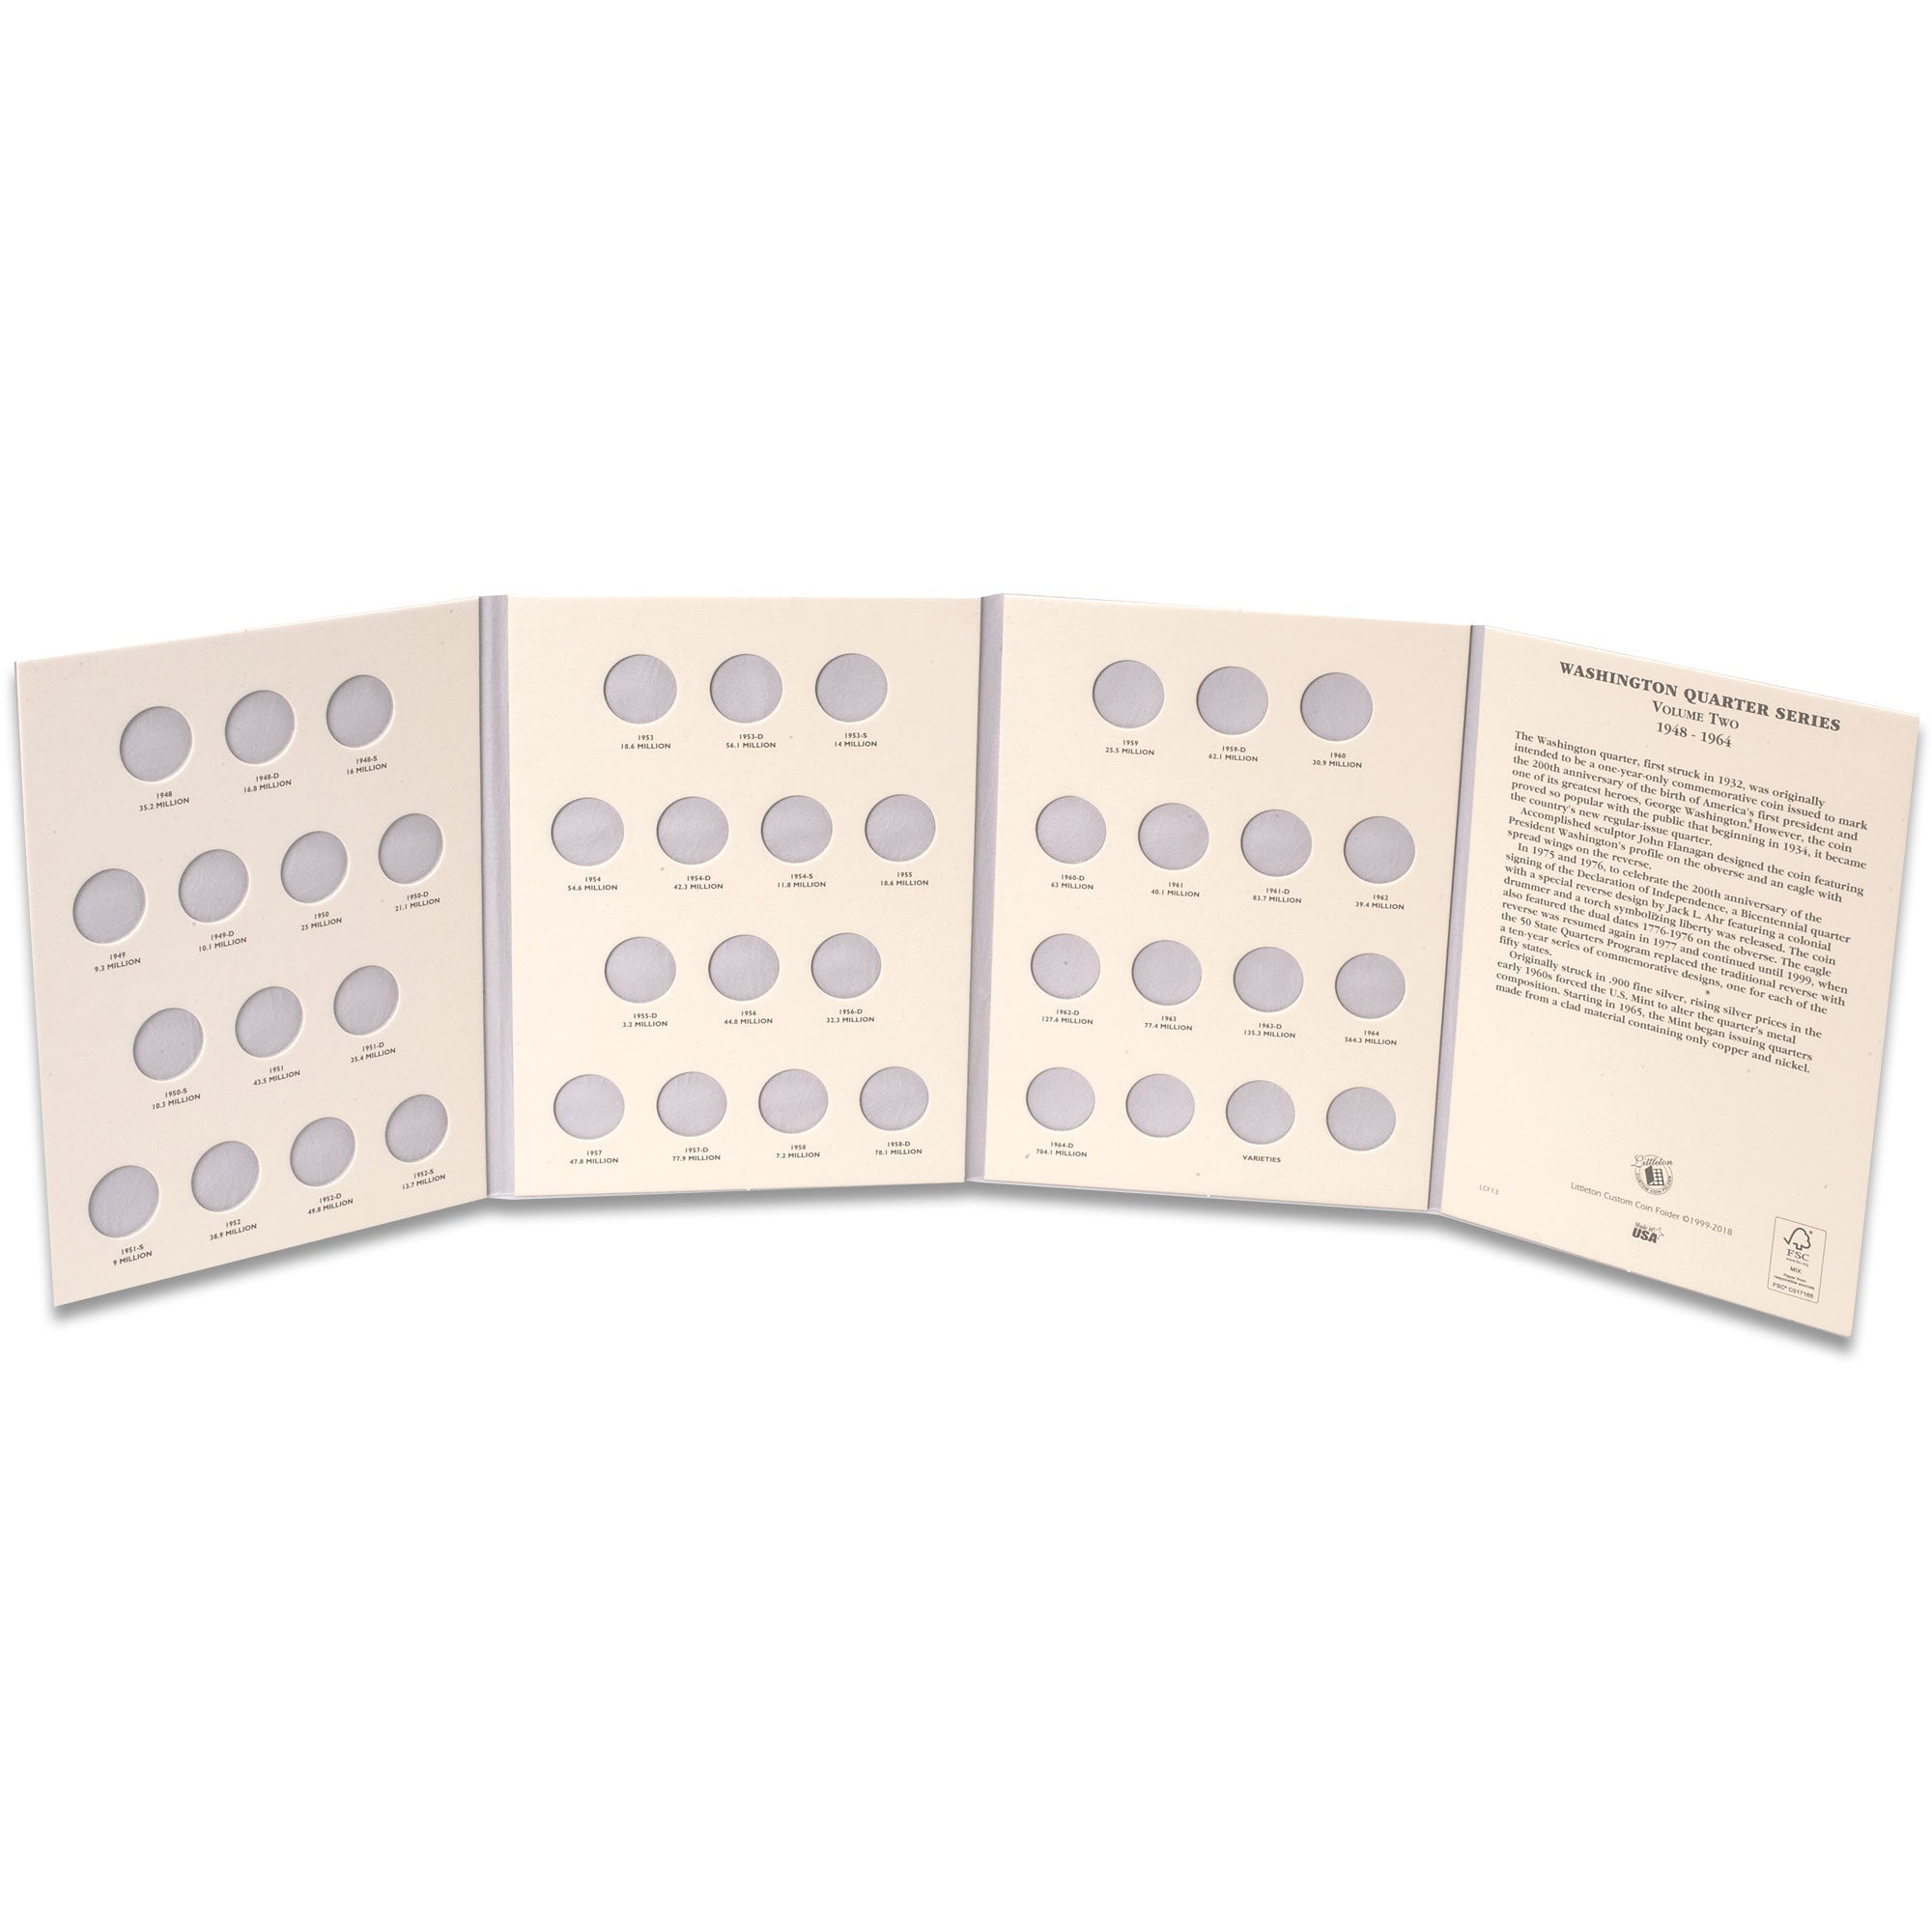 1948-1964 Washington Quarter Folder Volume 2 Littleton Coin Company